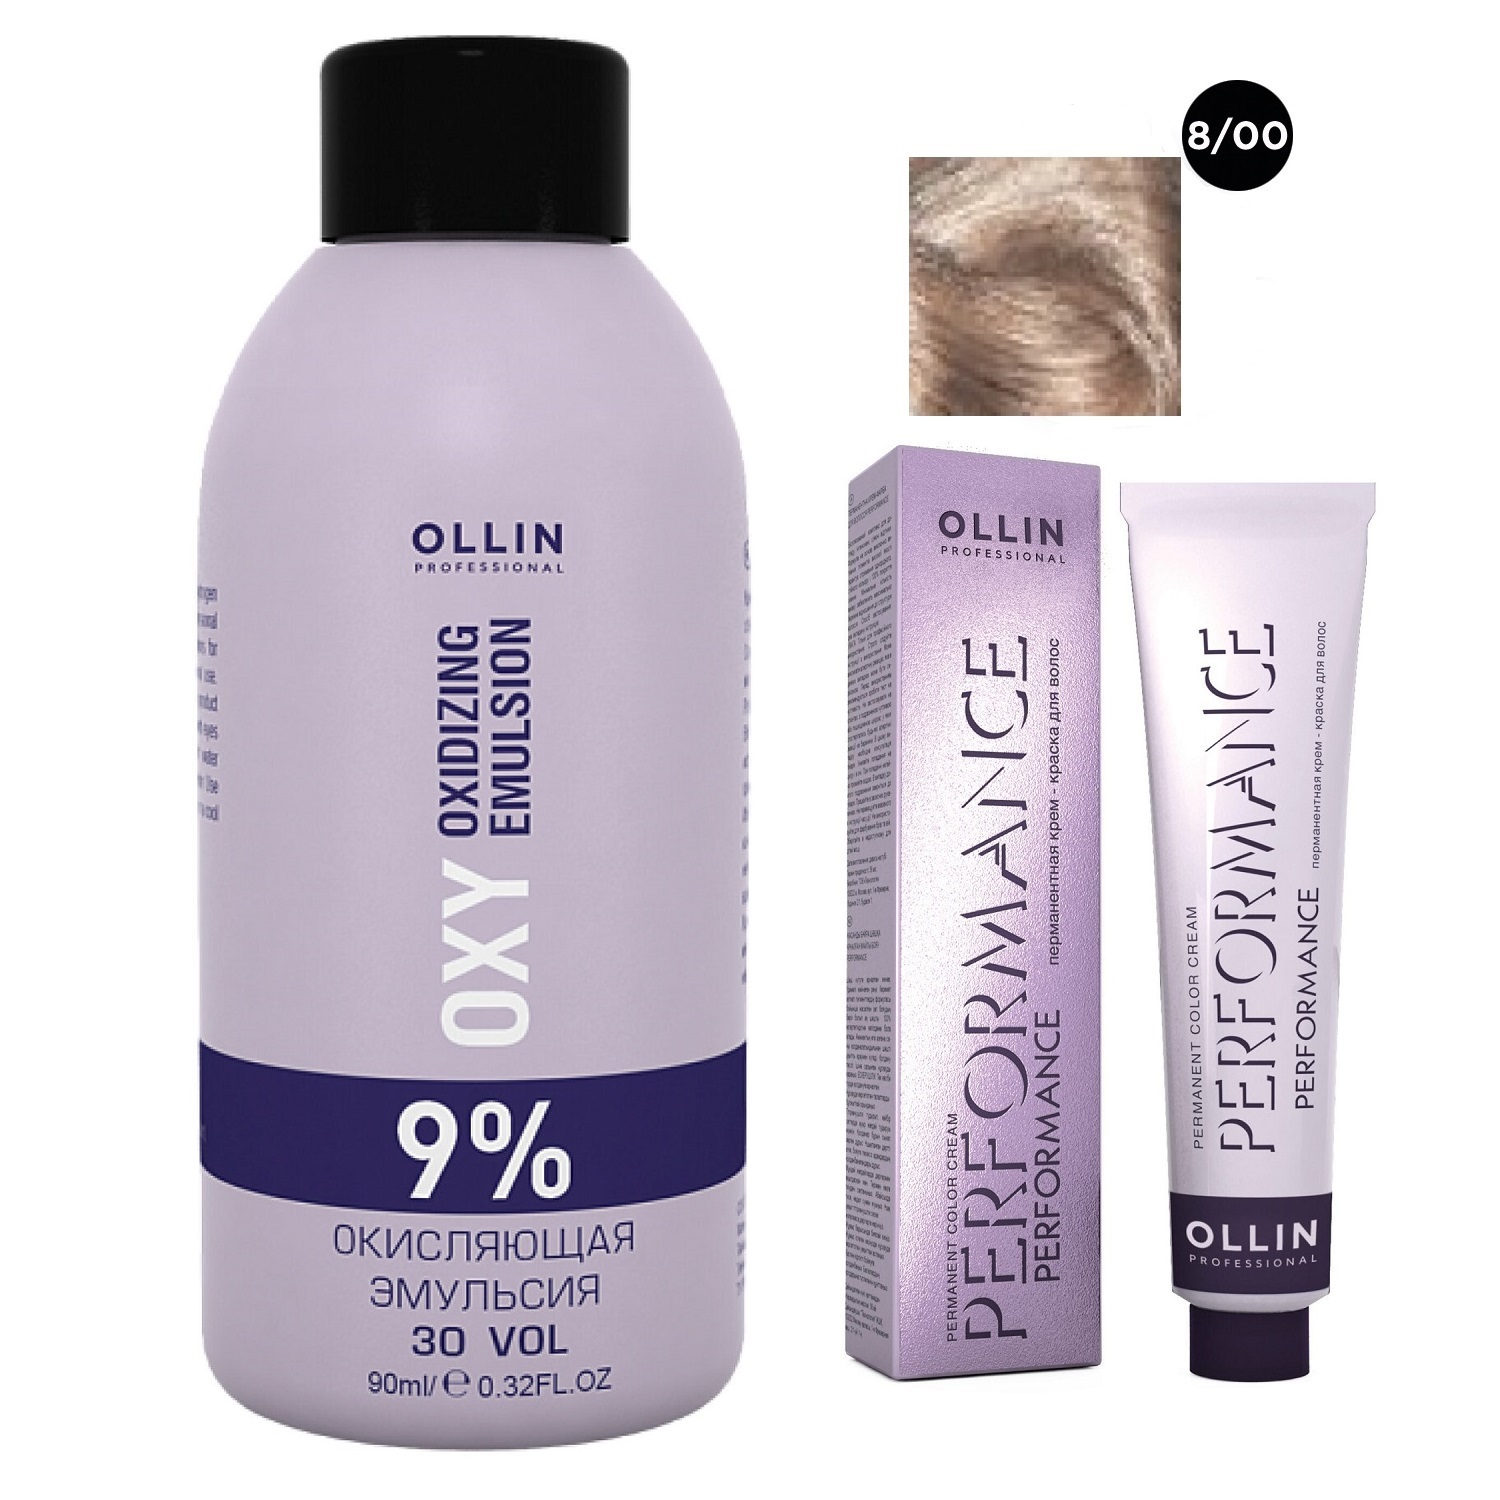 Ollin Professional Набор Перманентная крем-краска для волос Ollin Performance оттенок 8/00 светло-русый глубокий 60 мл + Окисляющая эмульсия Oxy 9% 90 мл (Ollin Professional, Performance)